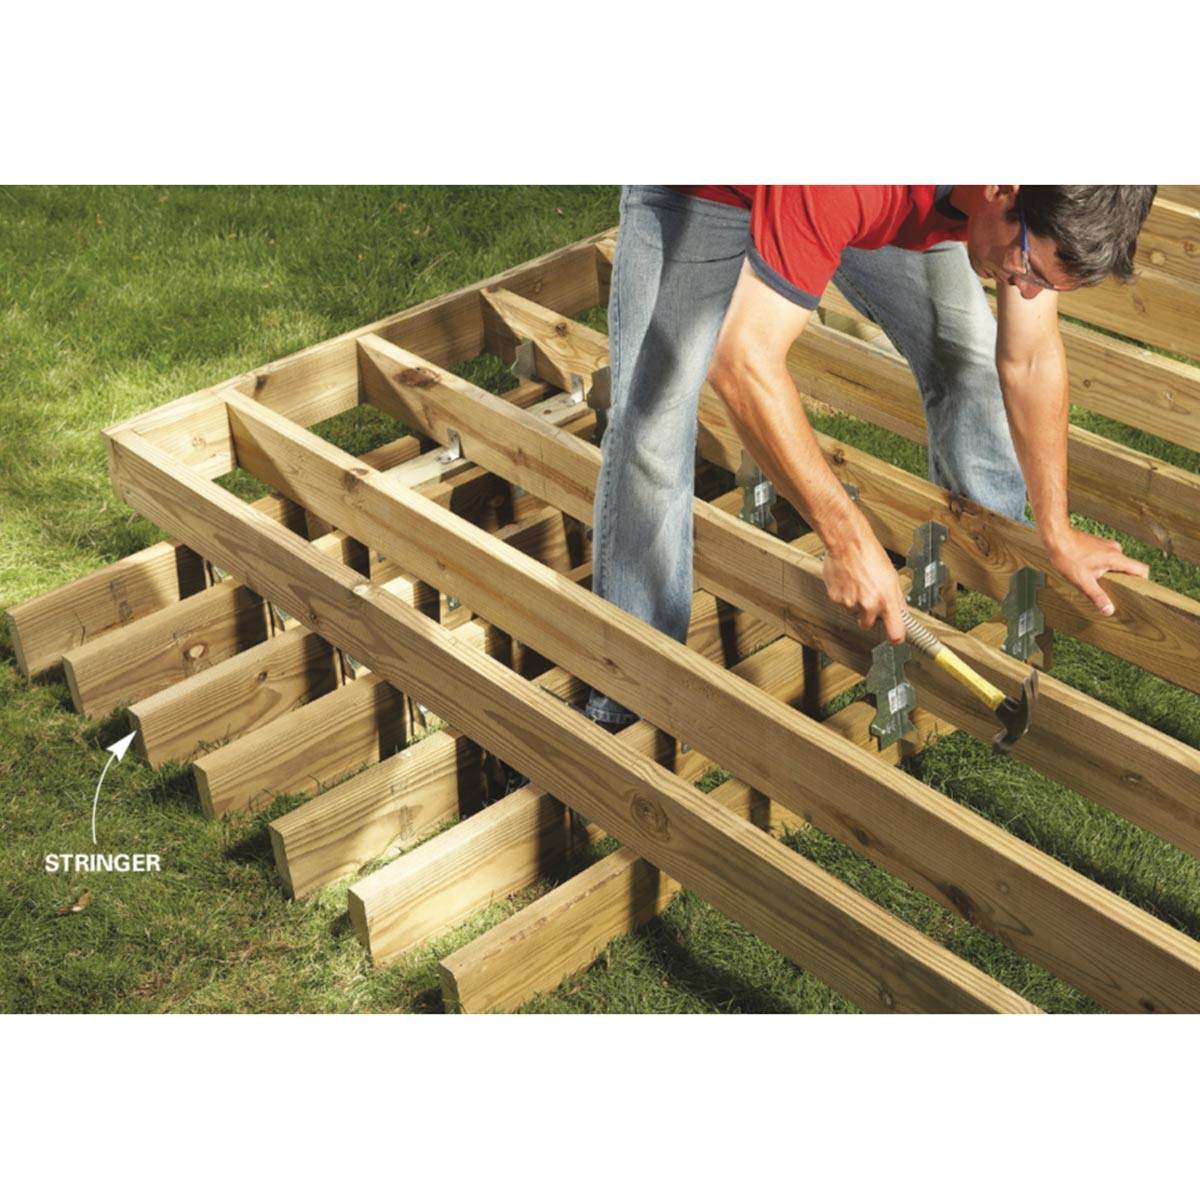 12x12 floating foundation deck plans